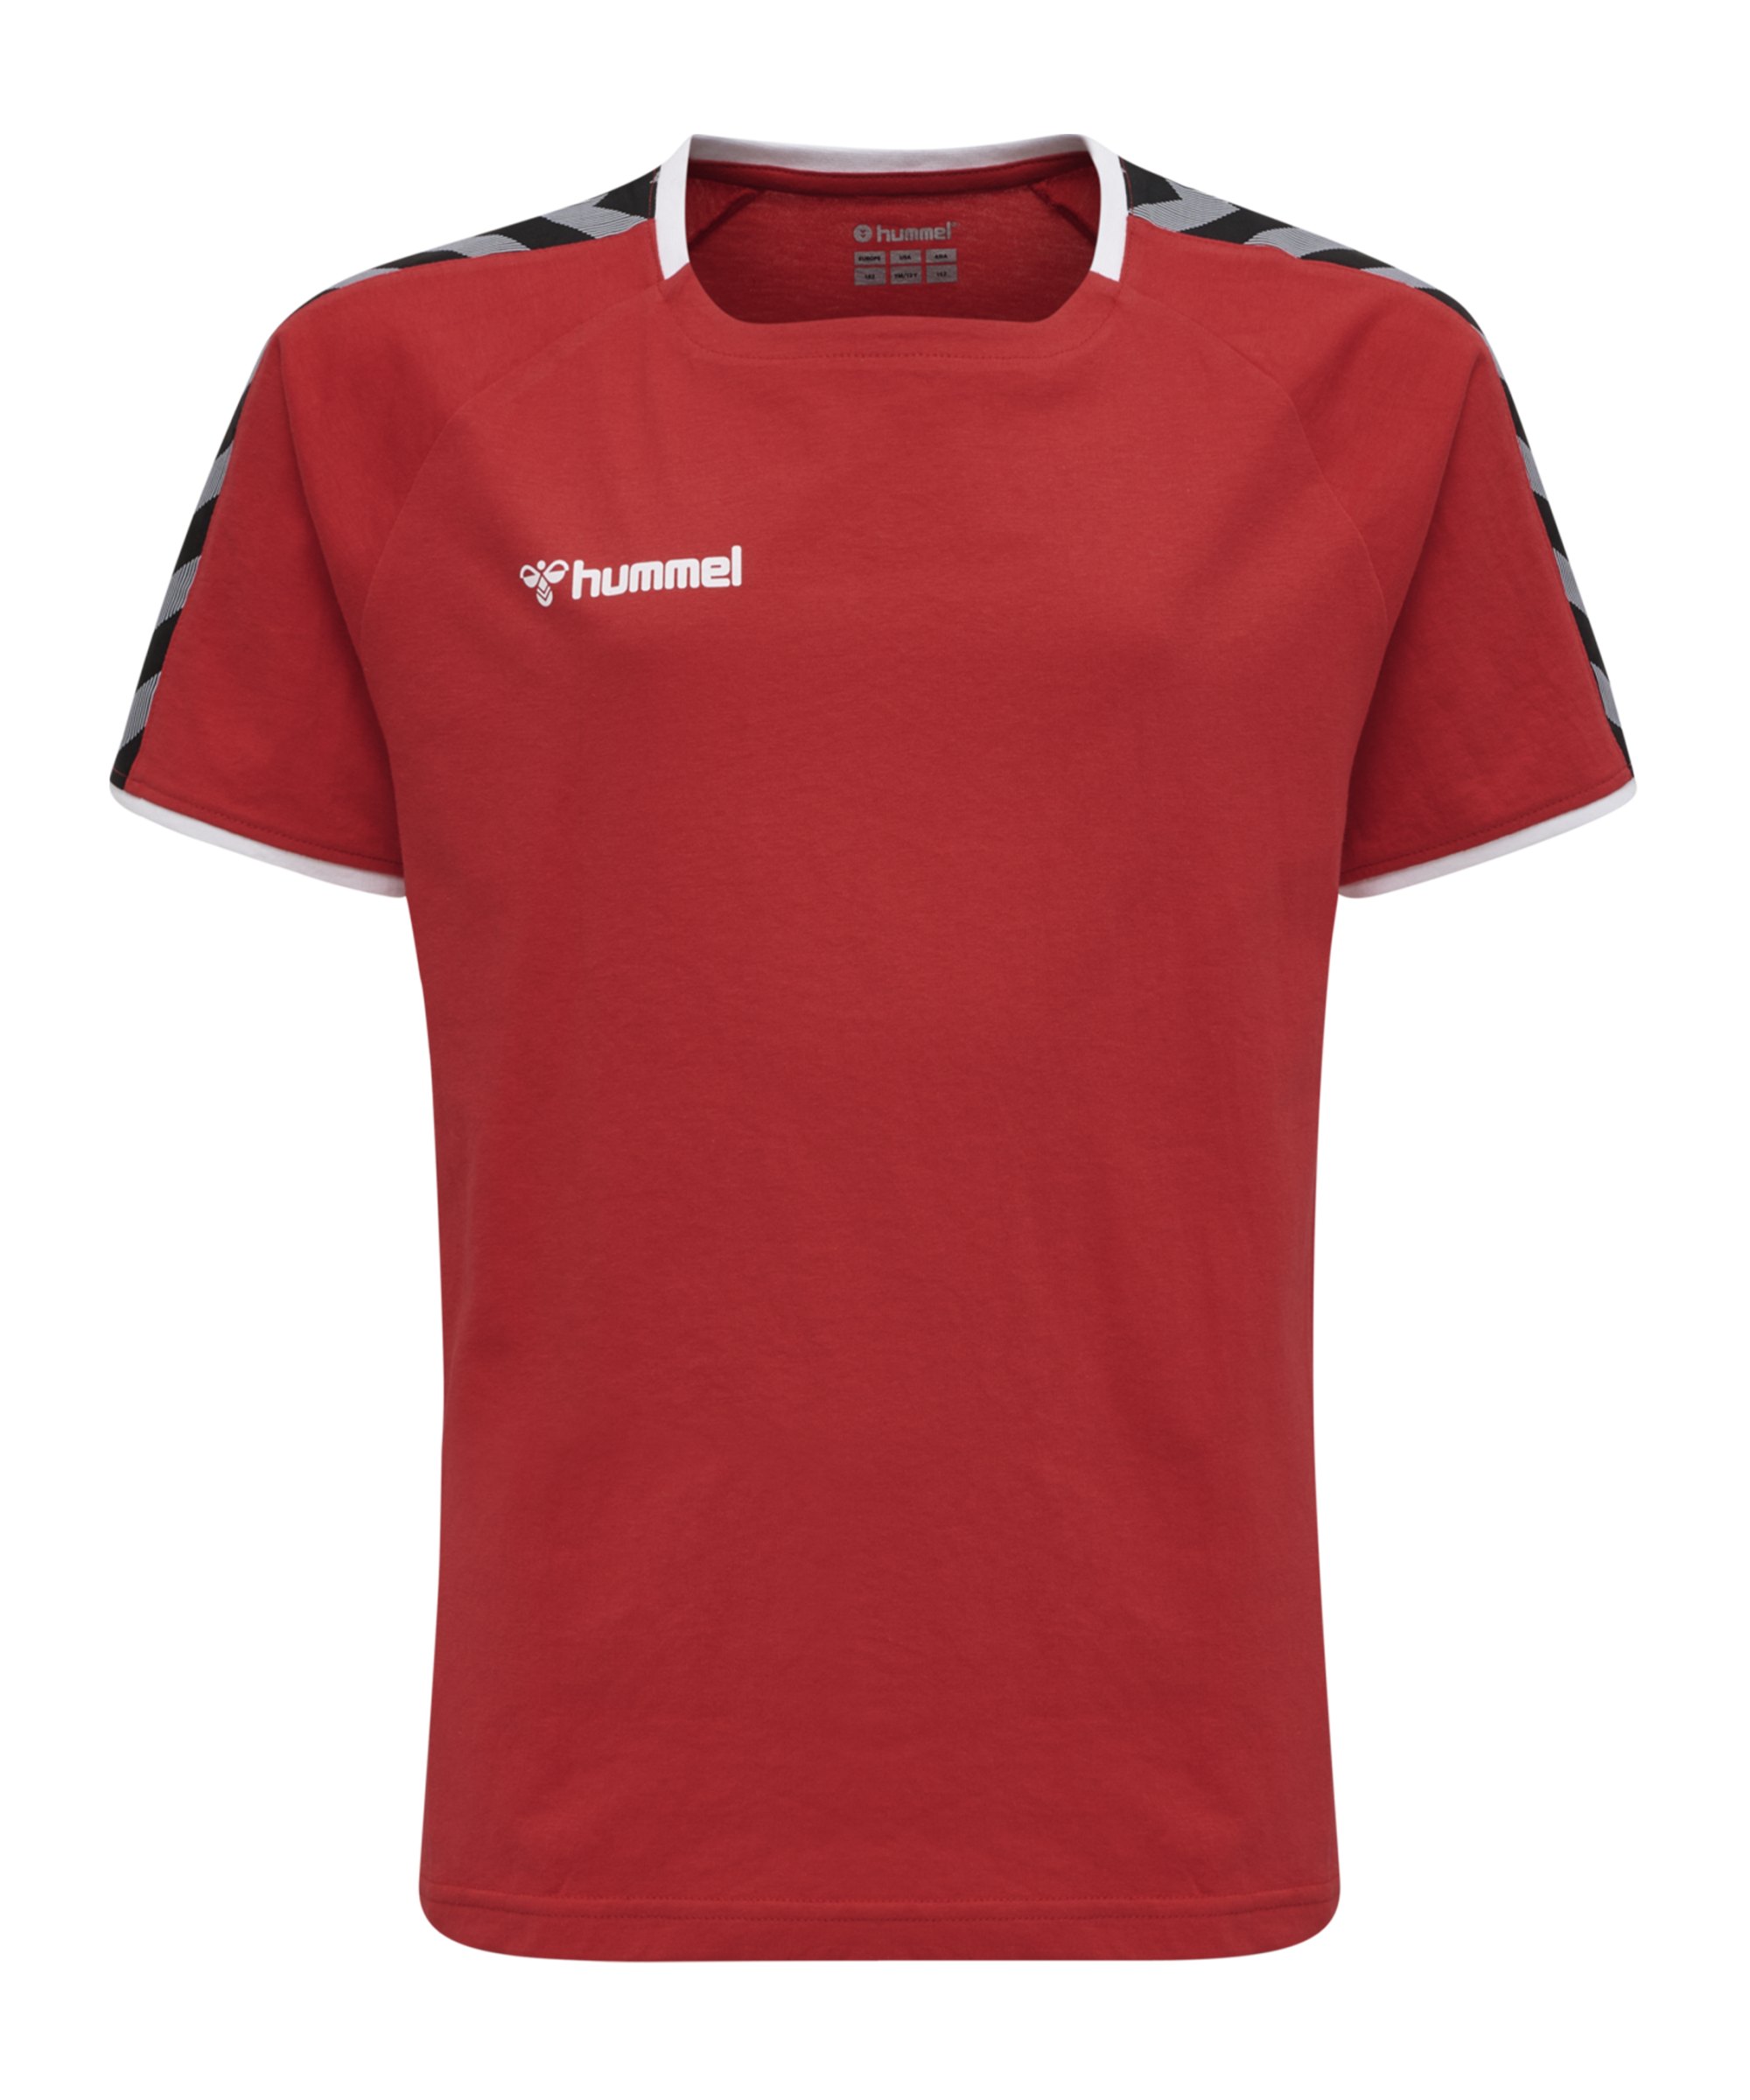 Hummel Authentic Trainingsshirt Kids Rot F3062 - rot